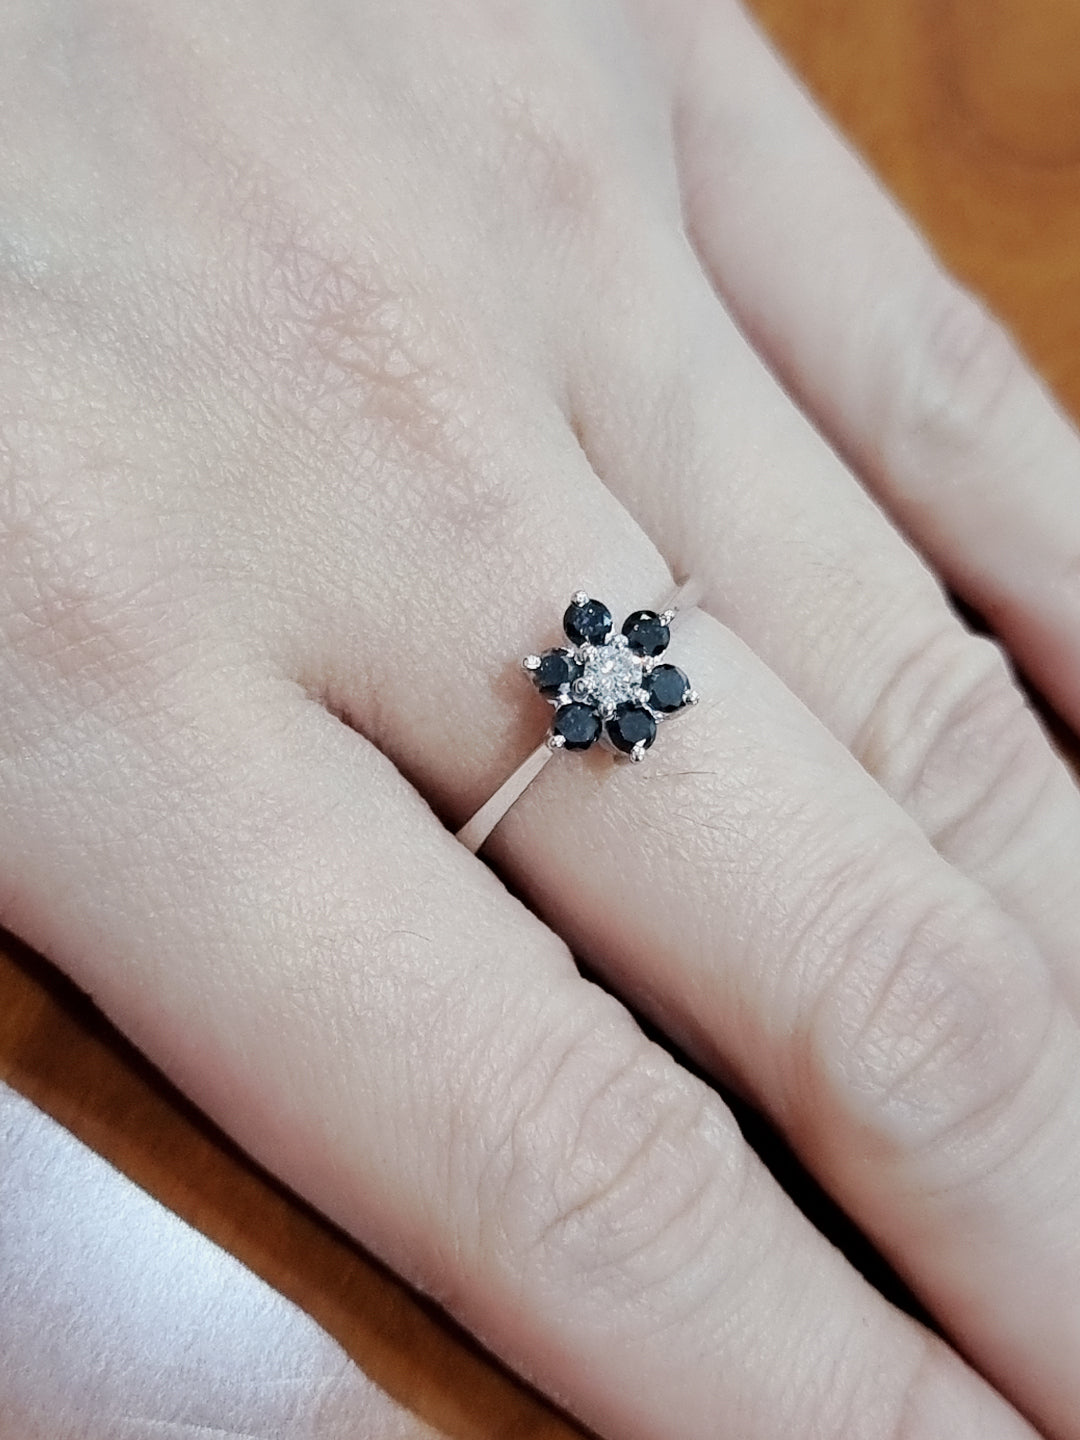 Floral Pattern, Black Diamond Ring In 18k White Gold.